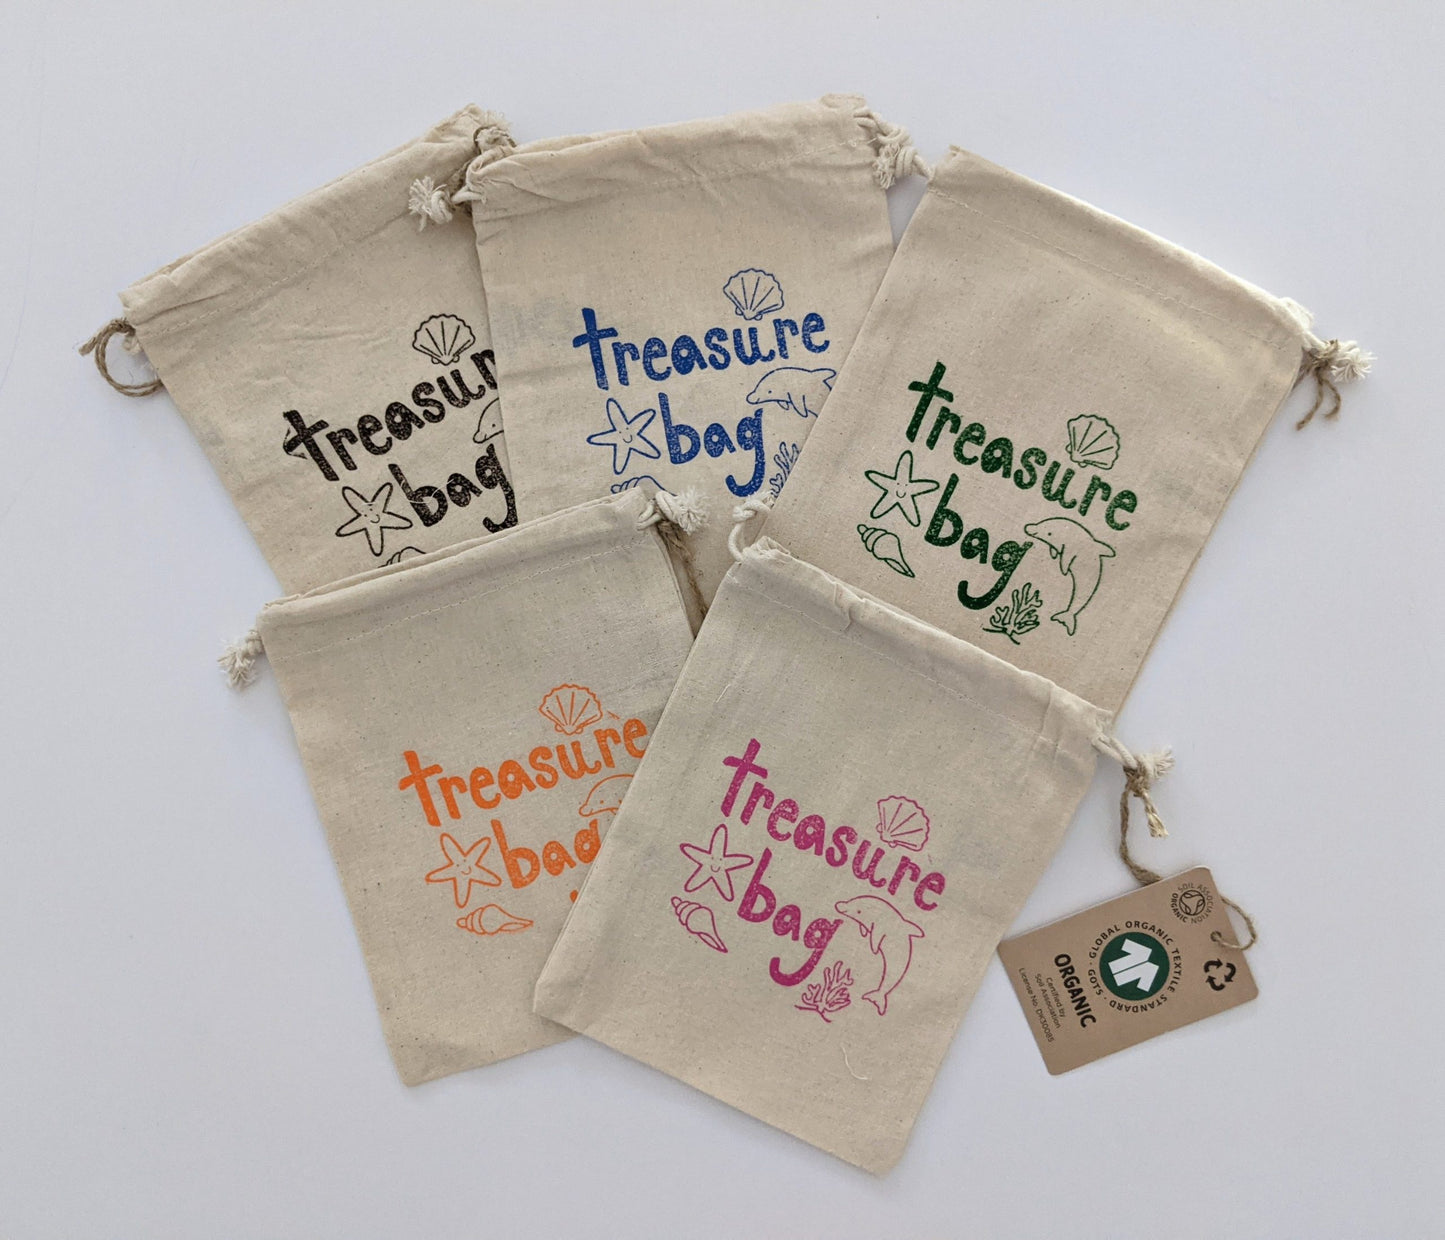 Organic Cotton Treasure Bags